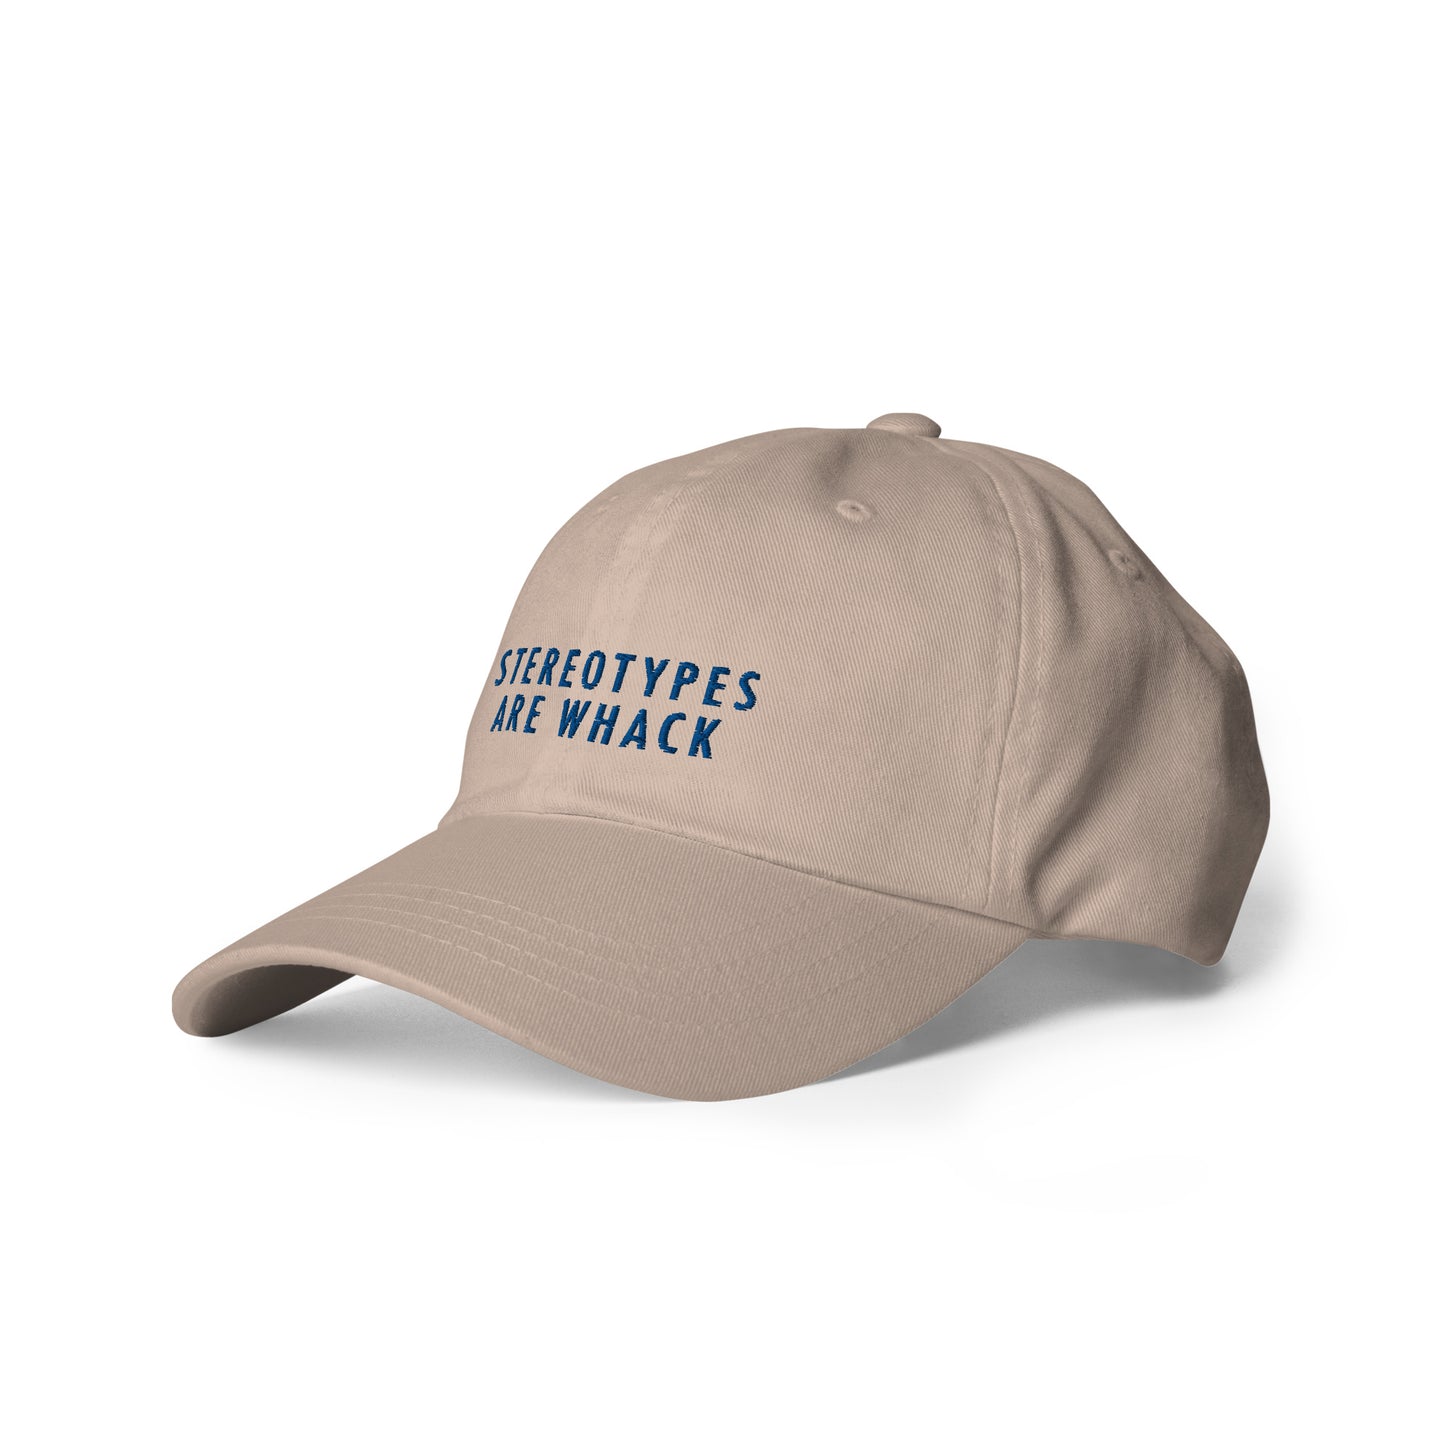 Baseball Hat — Stereotypes are Whack — Social Justice Baseball Cap